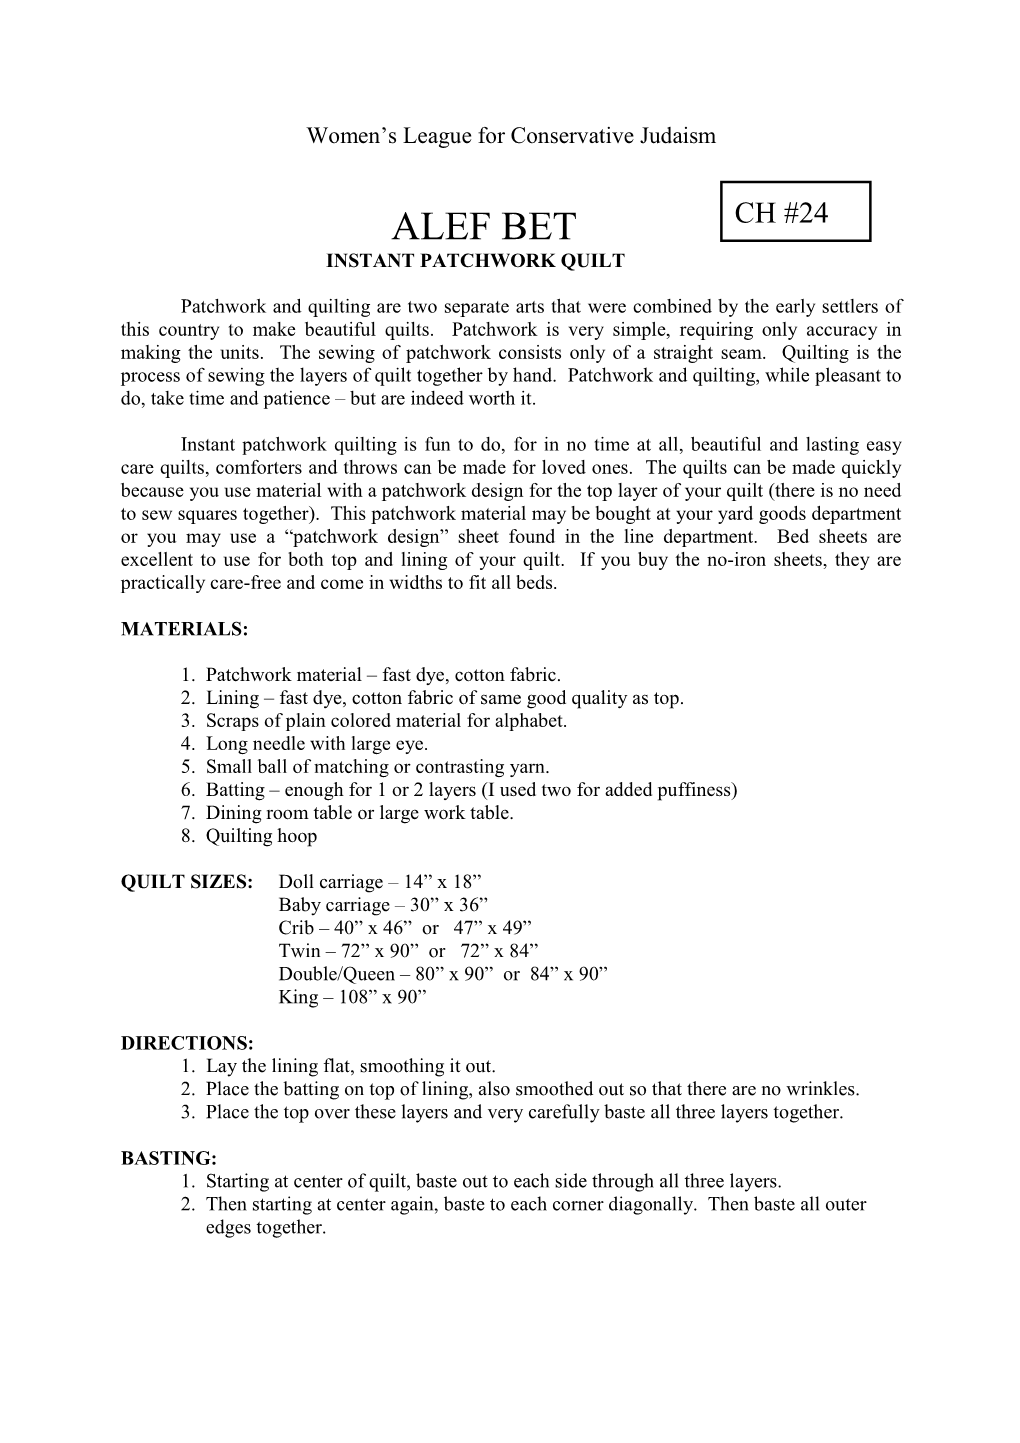 Alef-Bet Patchwork Quilt